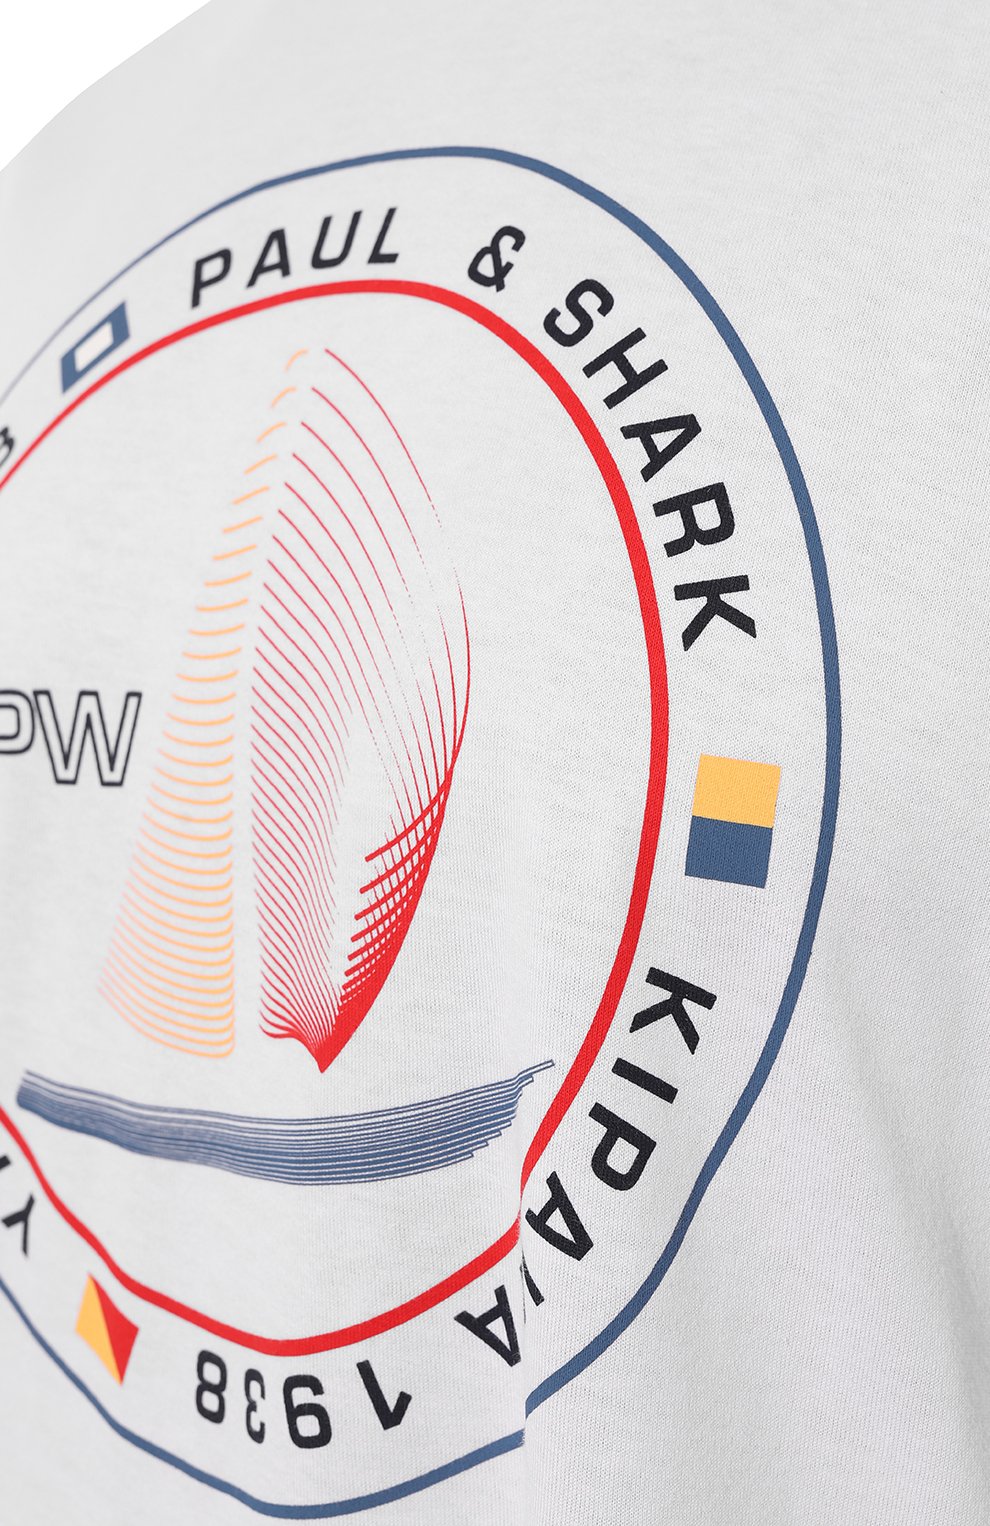 Paul & Shark Organic Cotton T-Shirt with Kipawa Print | White